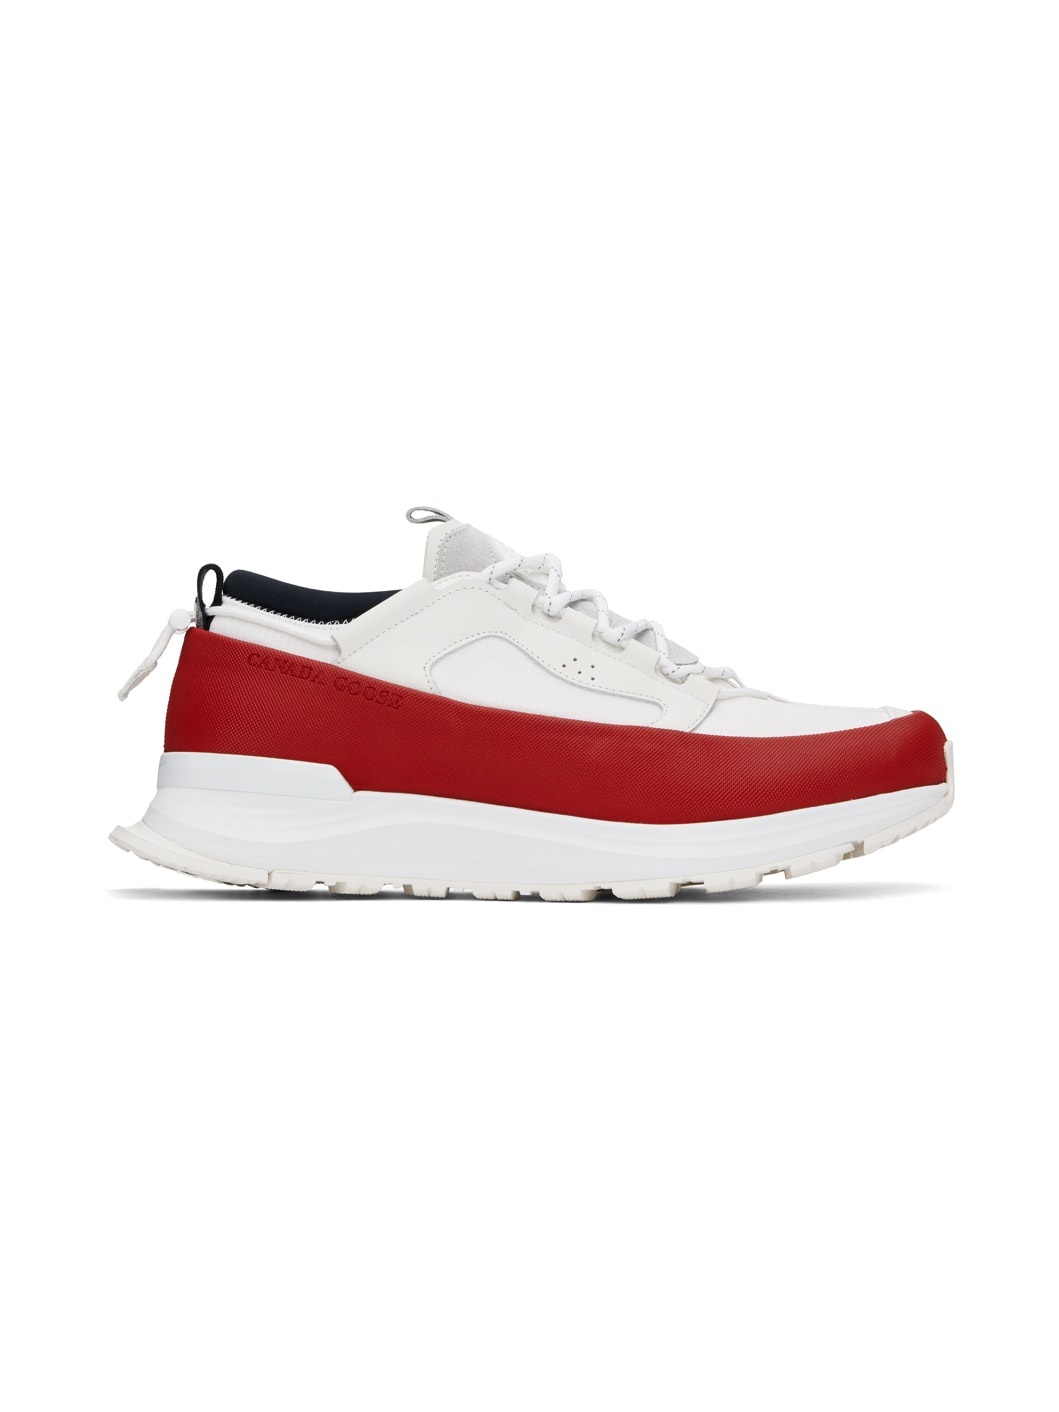 White & Red Glacier Trail Sneakers - 1